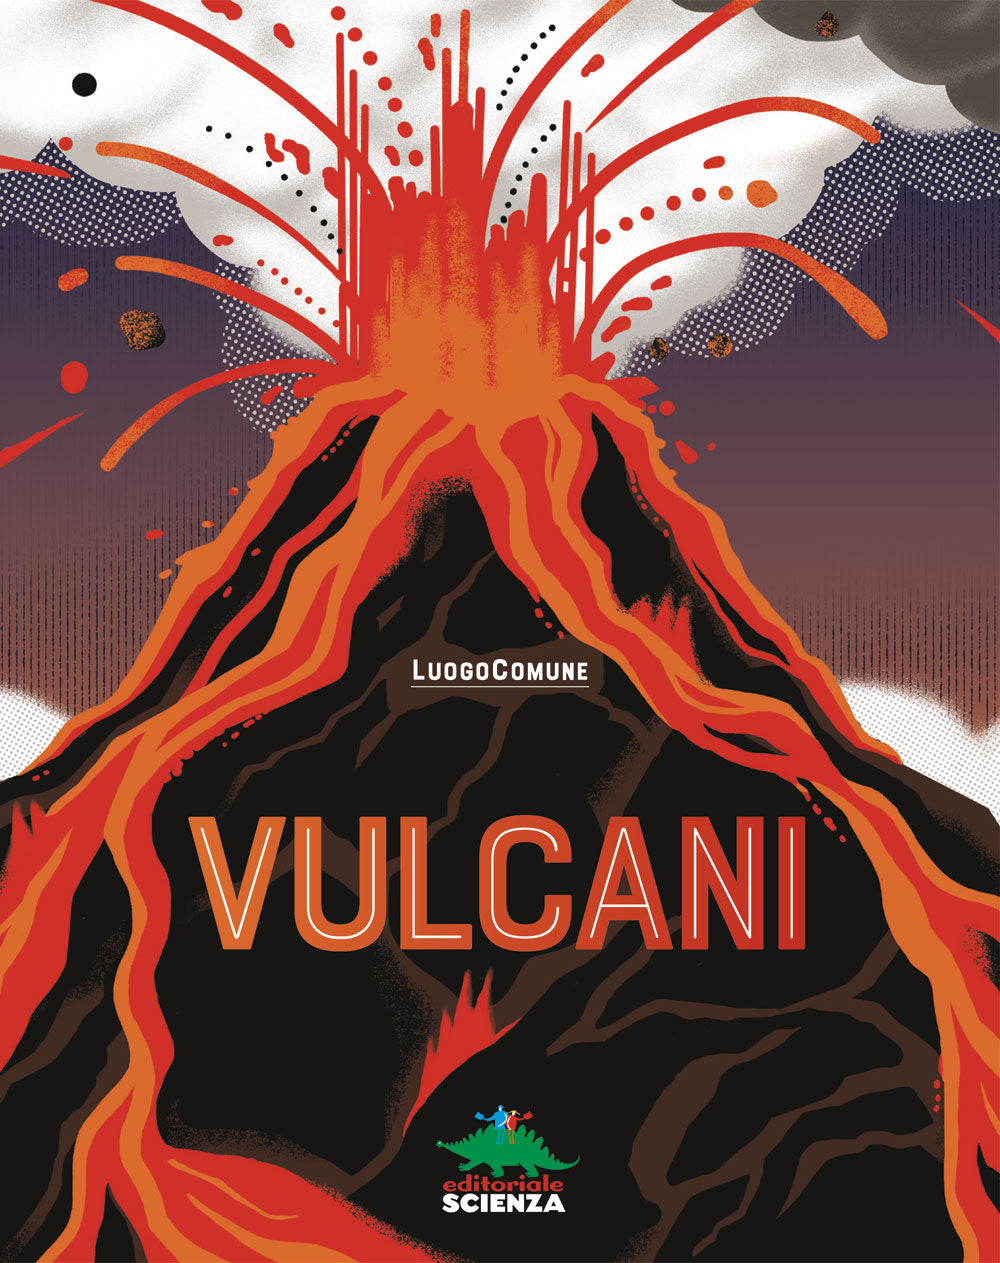 Vulcani